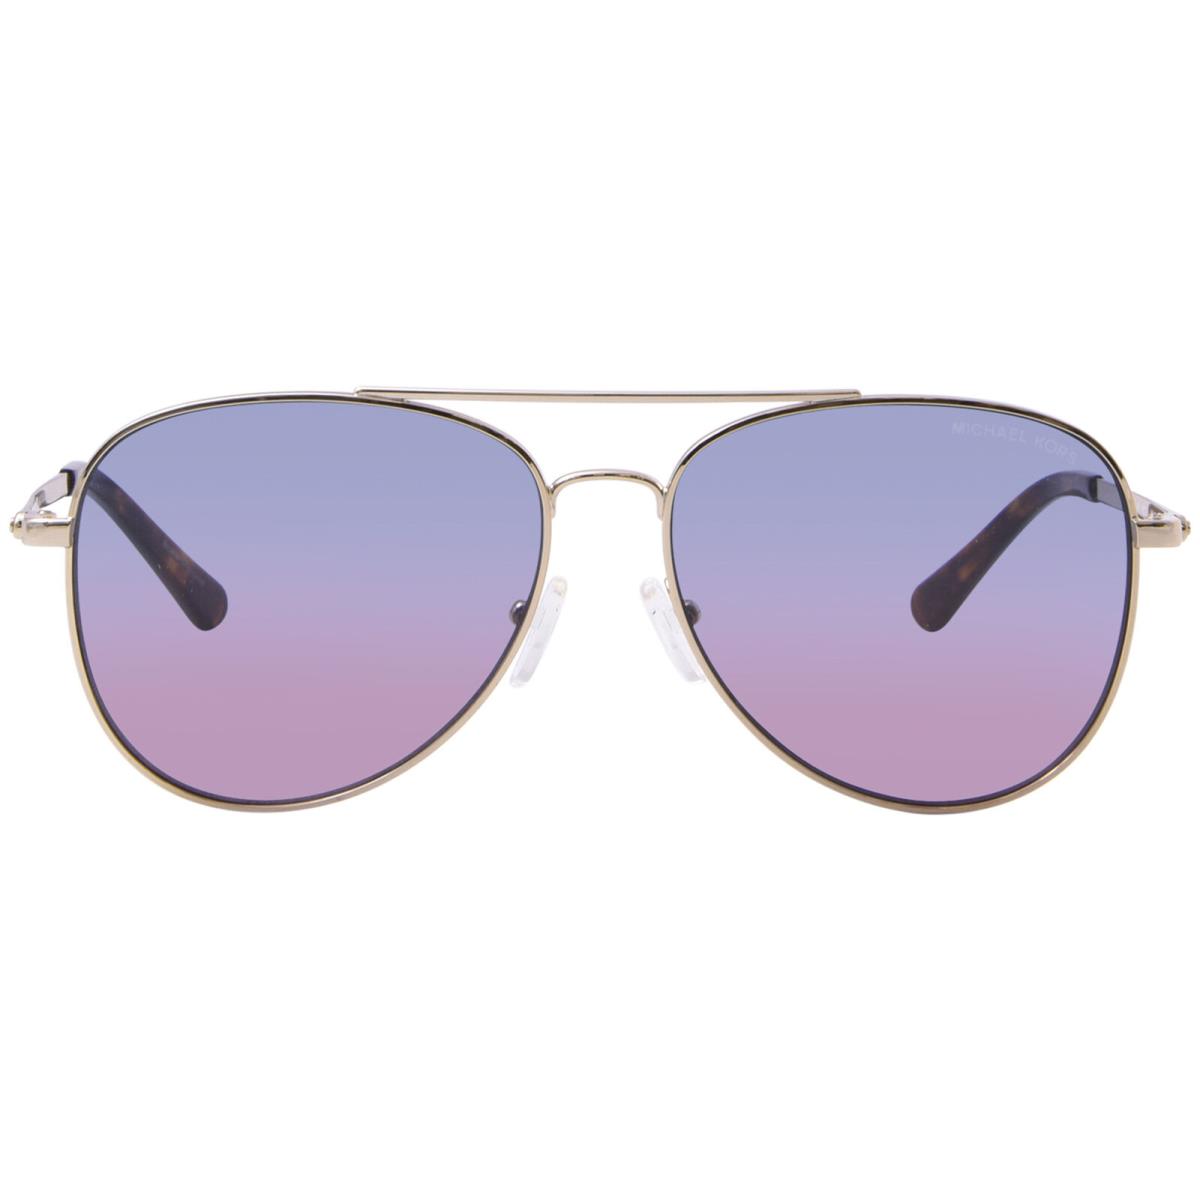 Michael Kors San-diego MK1045 11085 Sunglasses Womens Clear/light Pink Tint 60mm